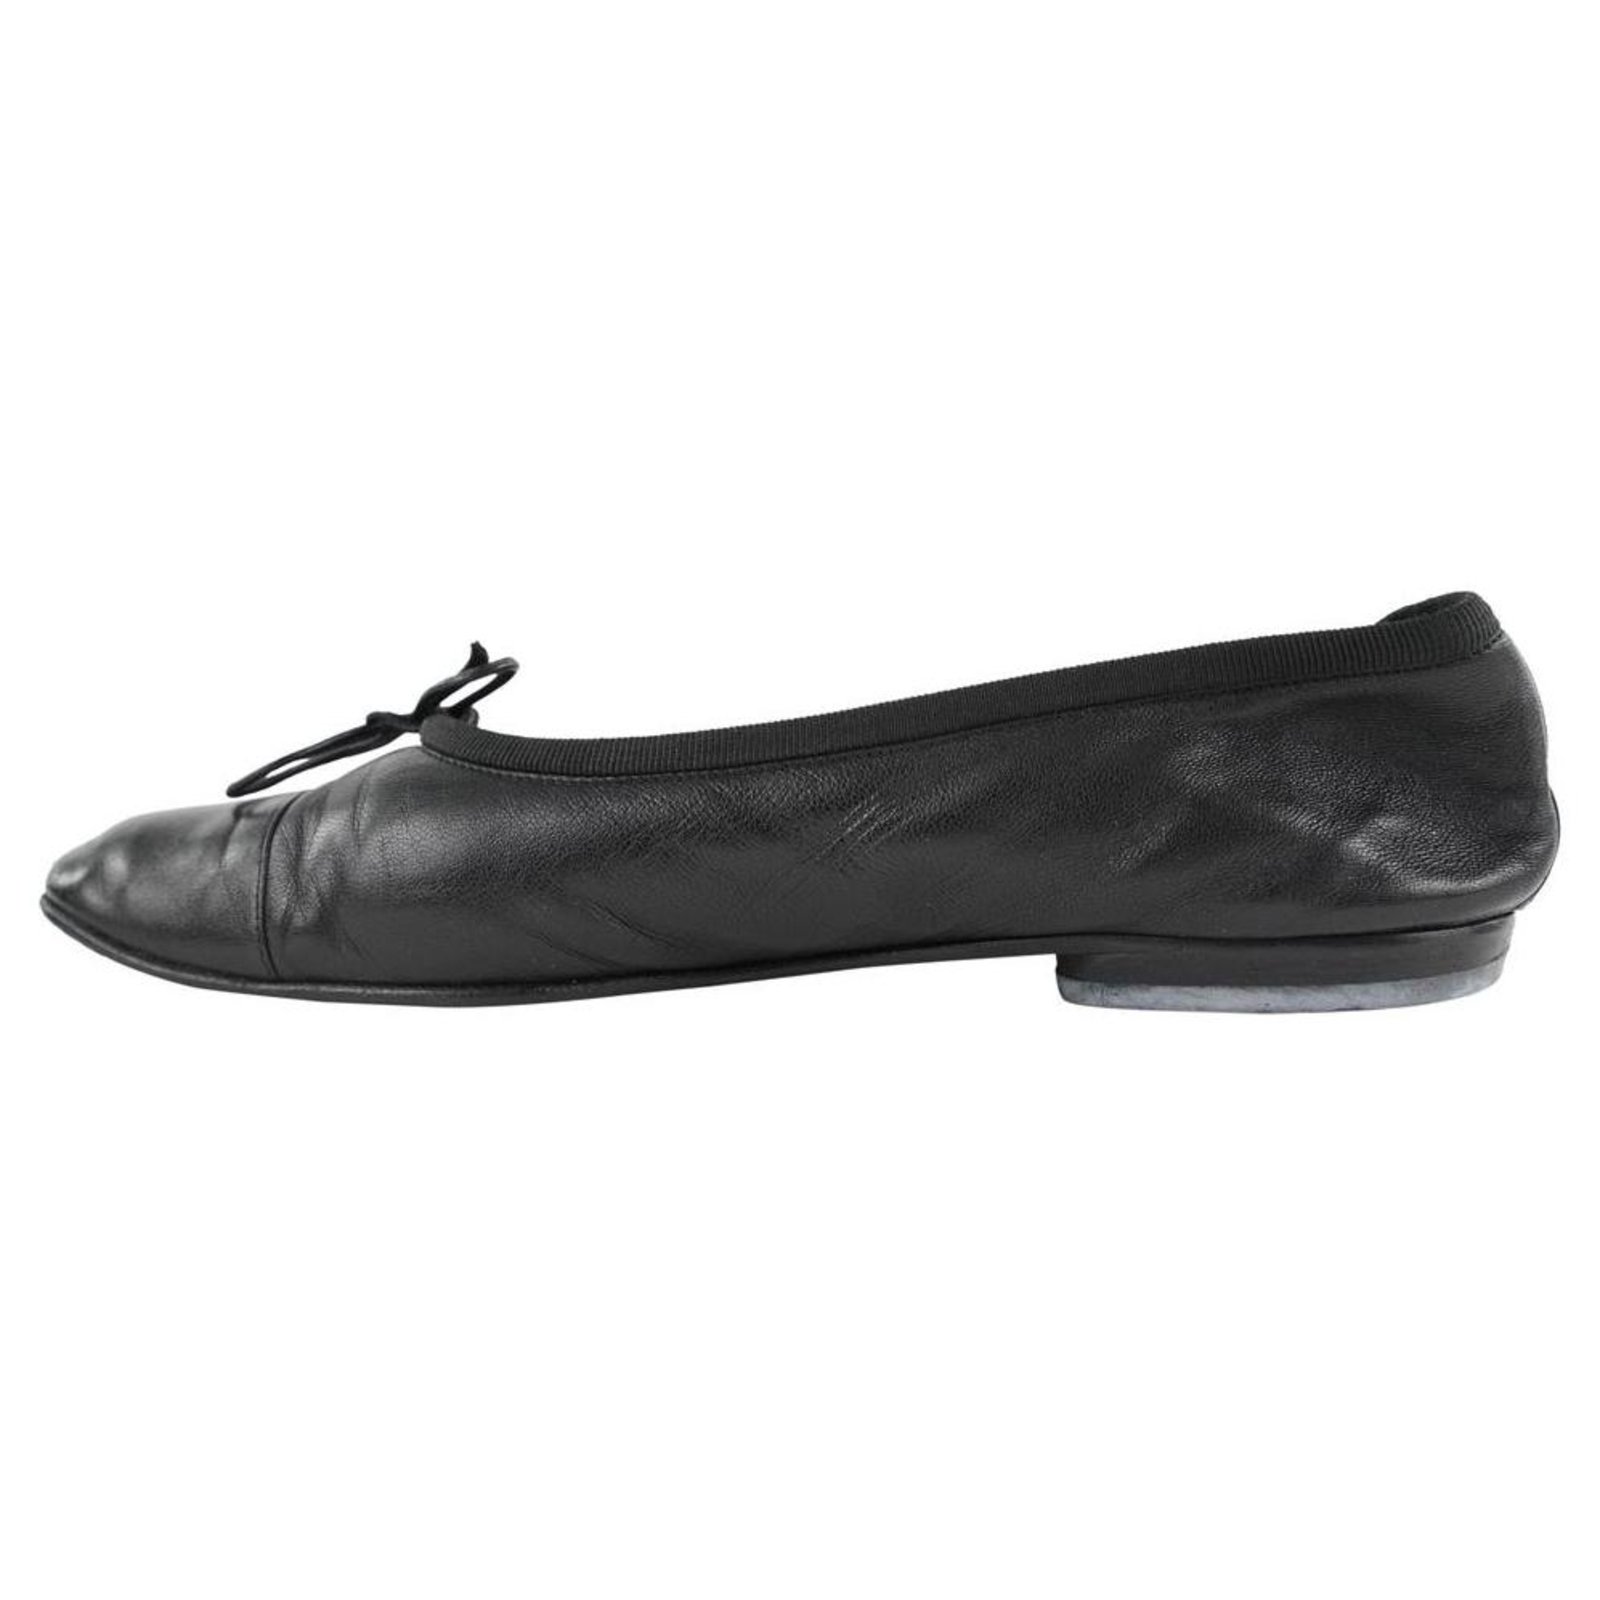 CHANEL Beautiful Black Patent Leather Ballet Flats size 38.5